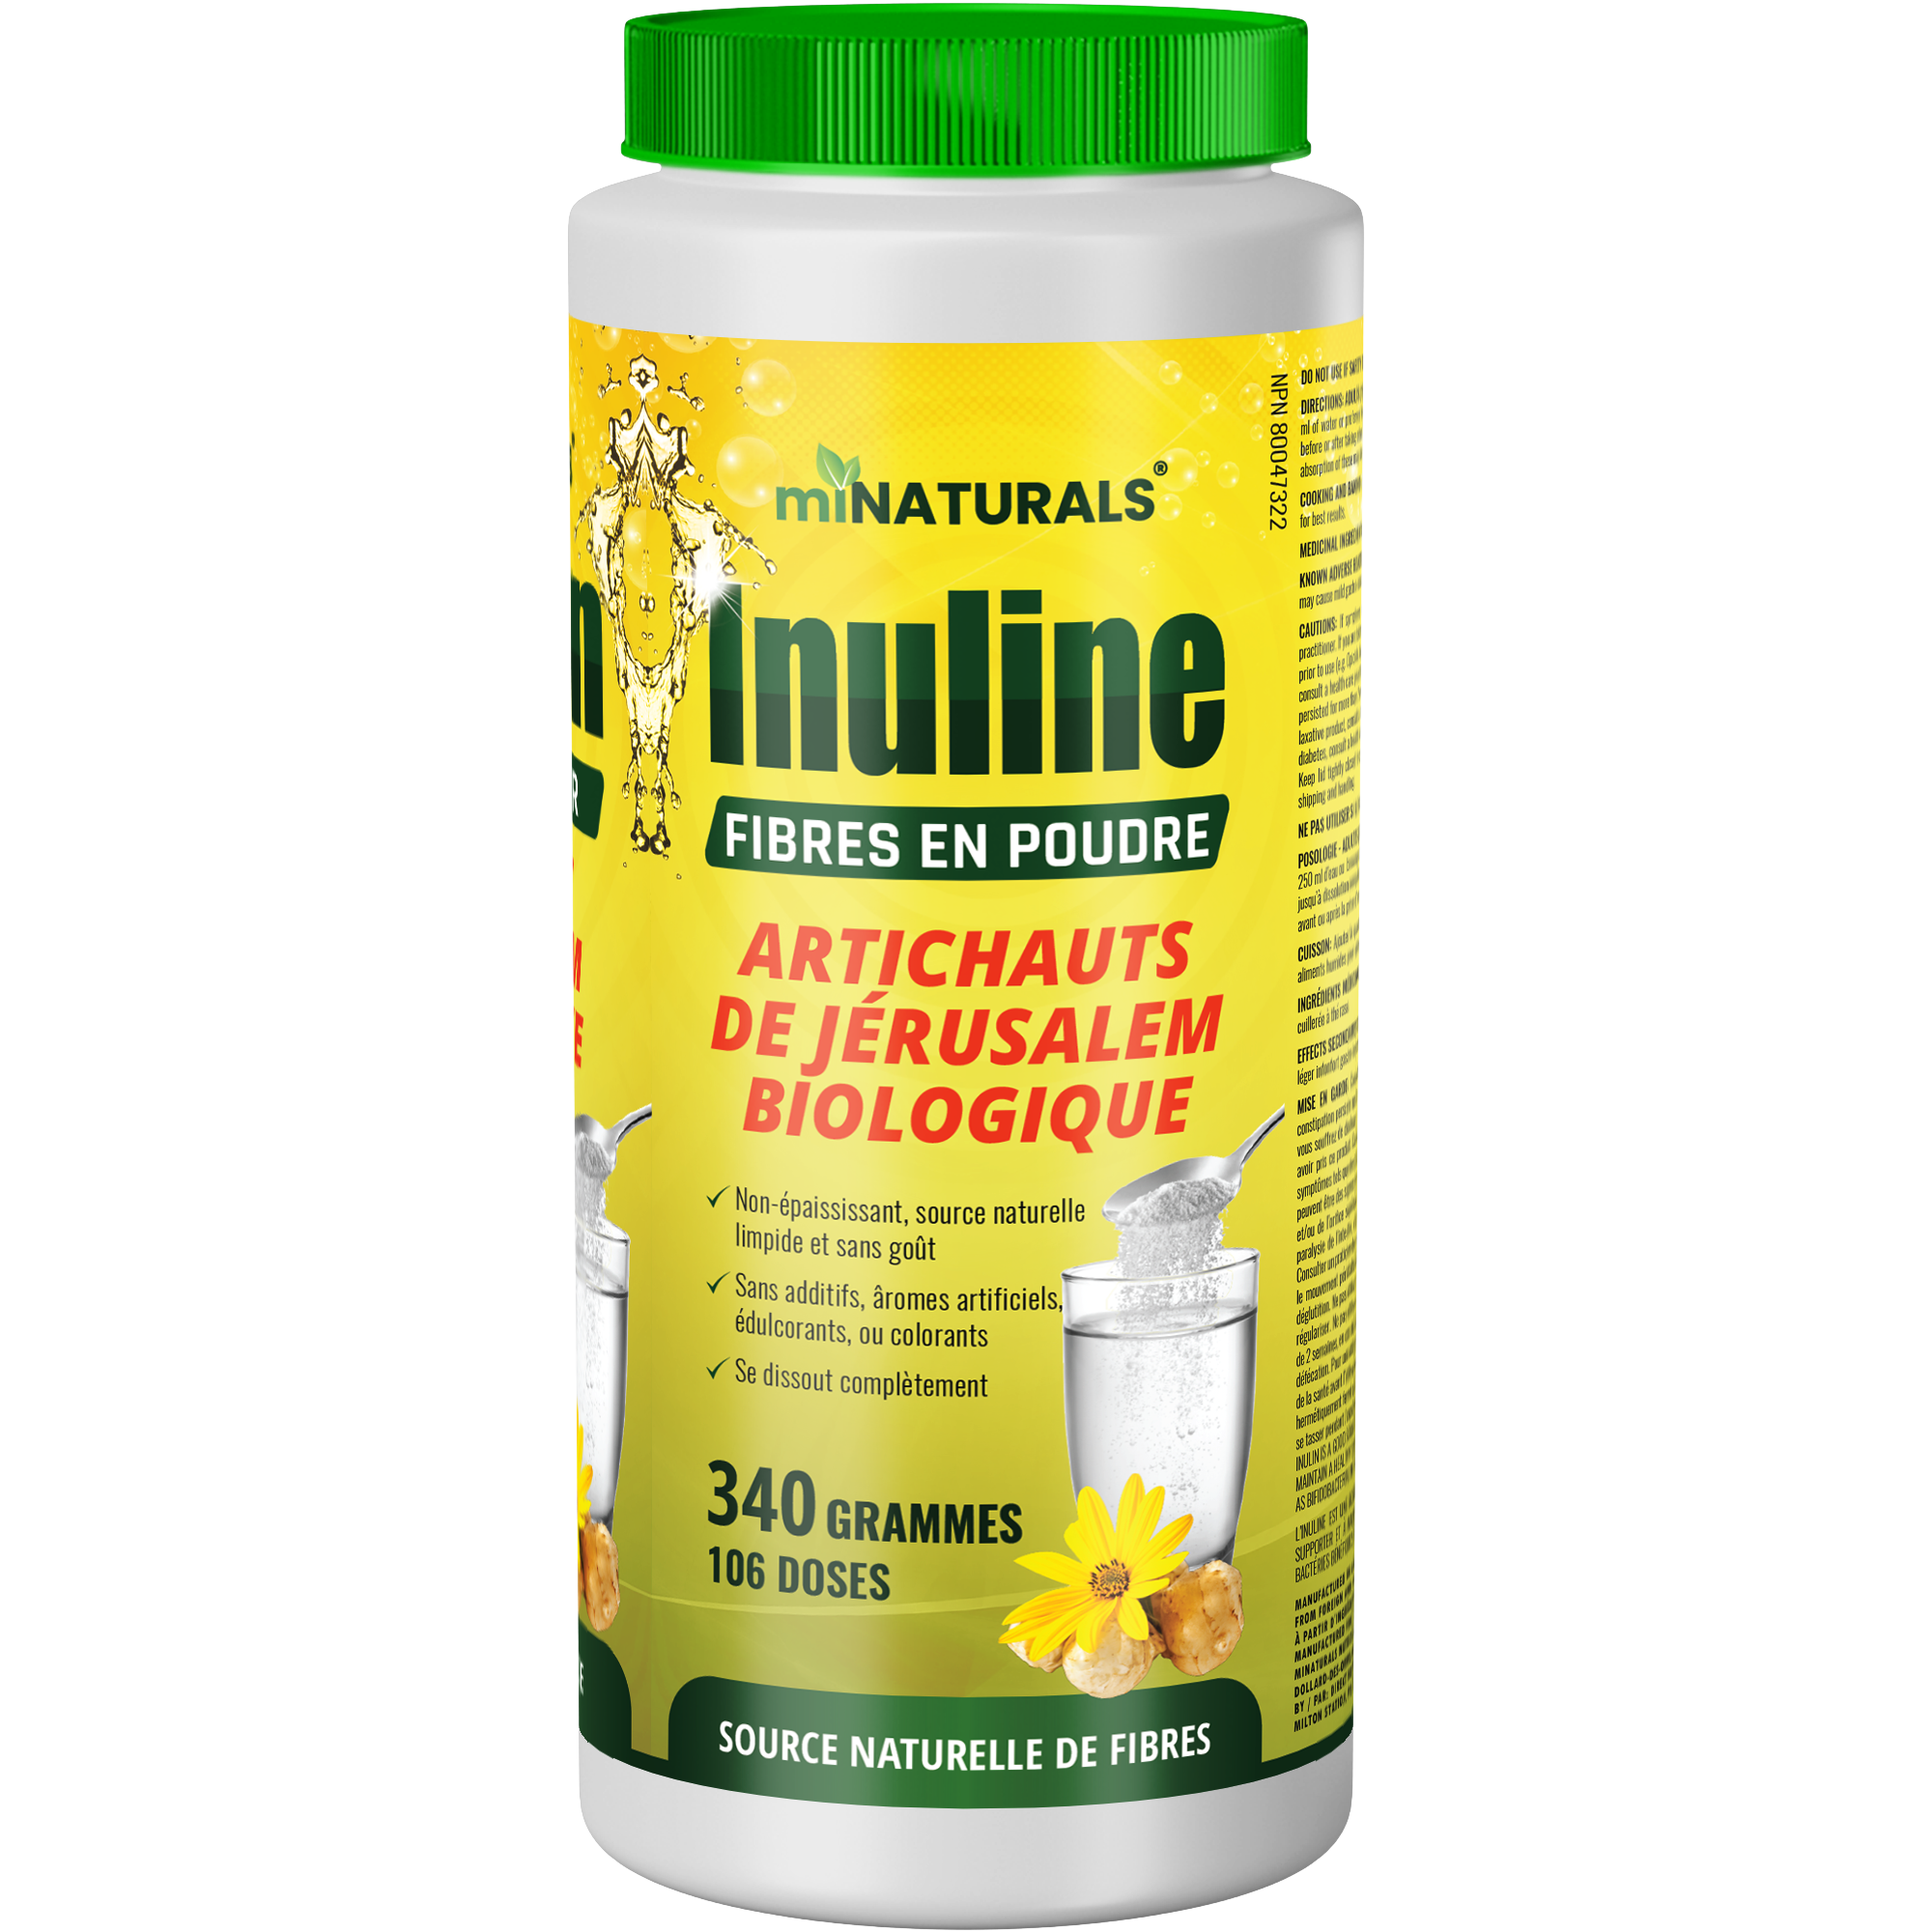 Pure Inulin Fiber Powder  - Natural Prebiotic Fibre Supplement - Made from Organic Jerusalem Artichoke - (340g - 106 Doses)